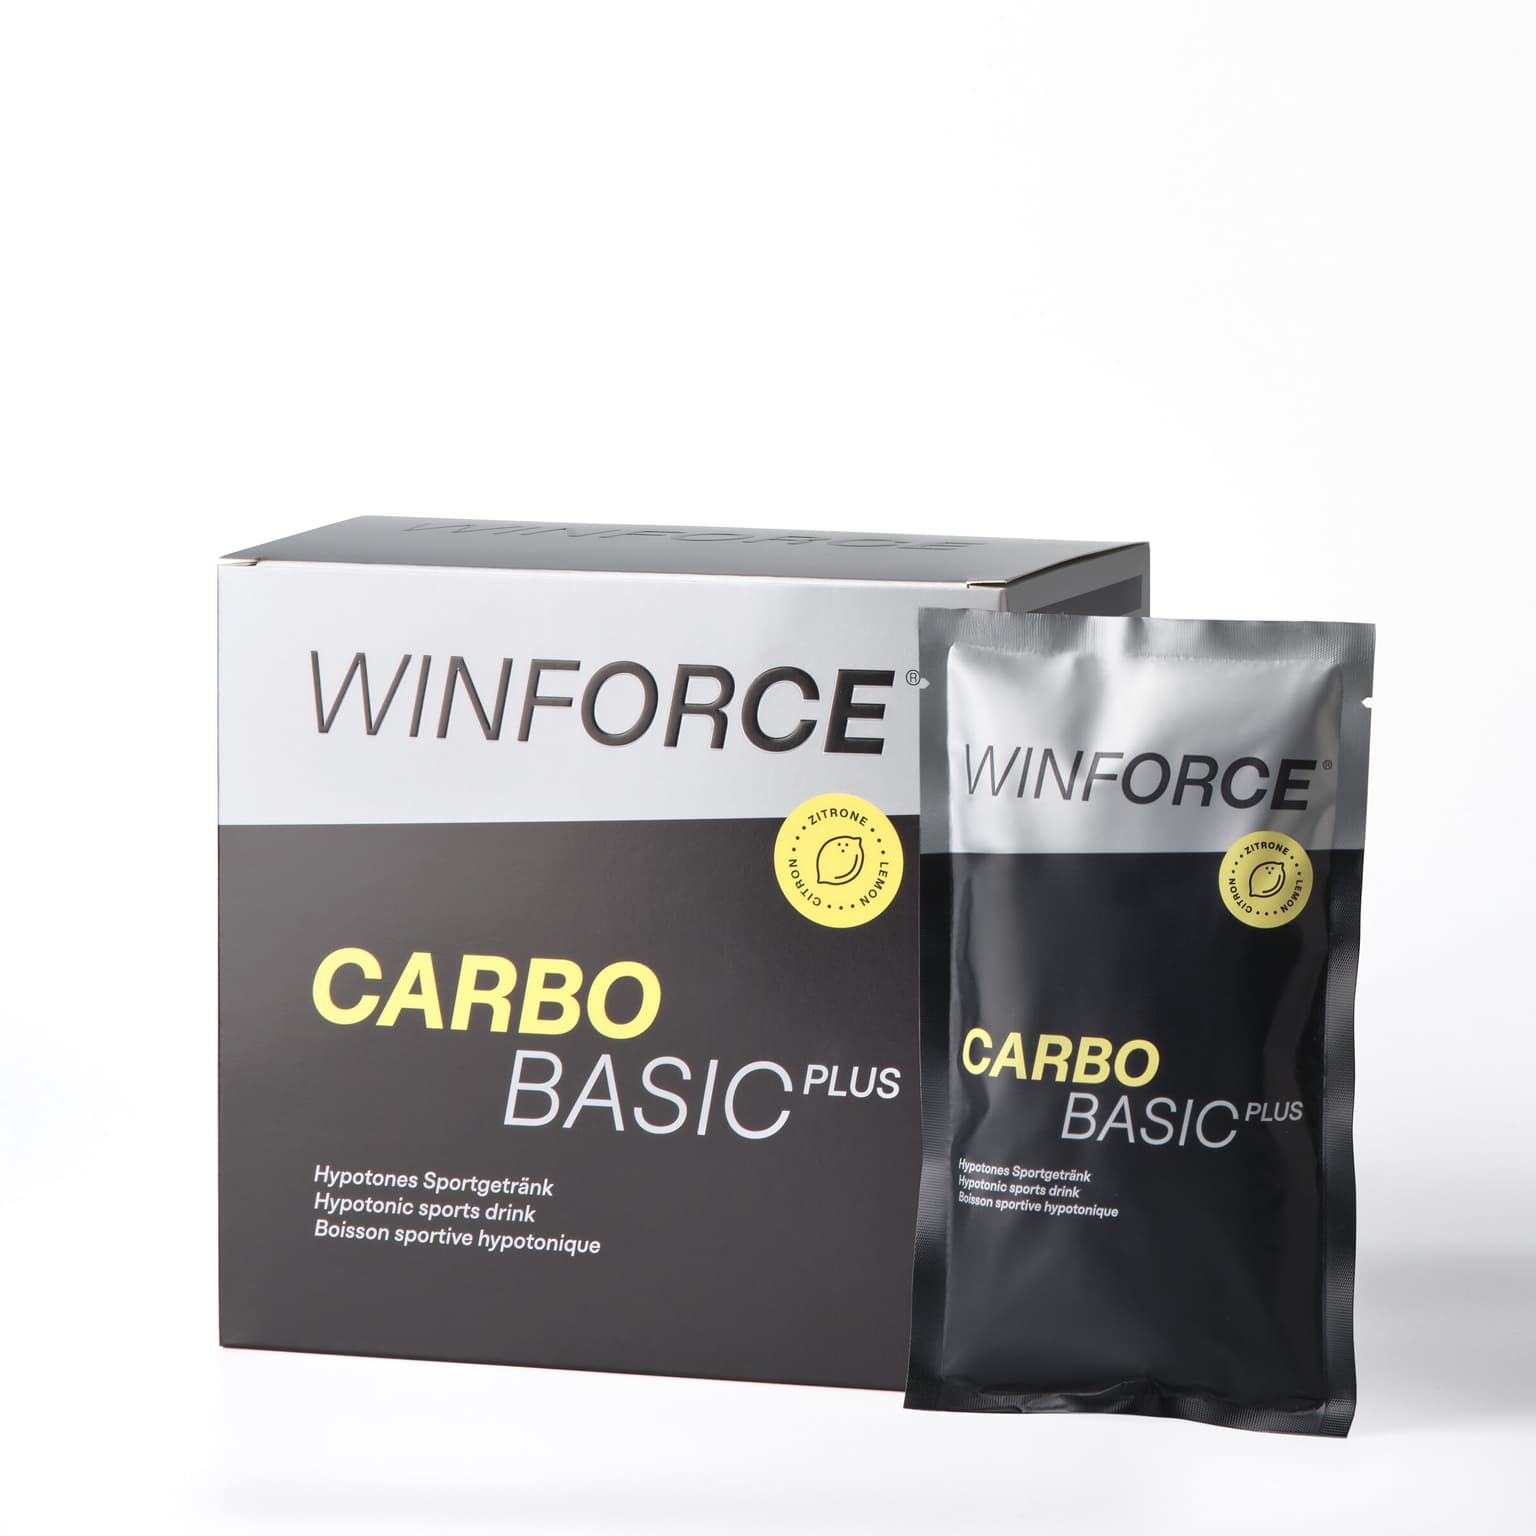 Winforce Winforce Carbo Basic Plus Sportgetränk policromo 1